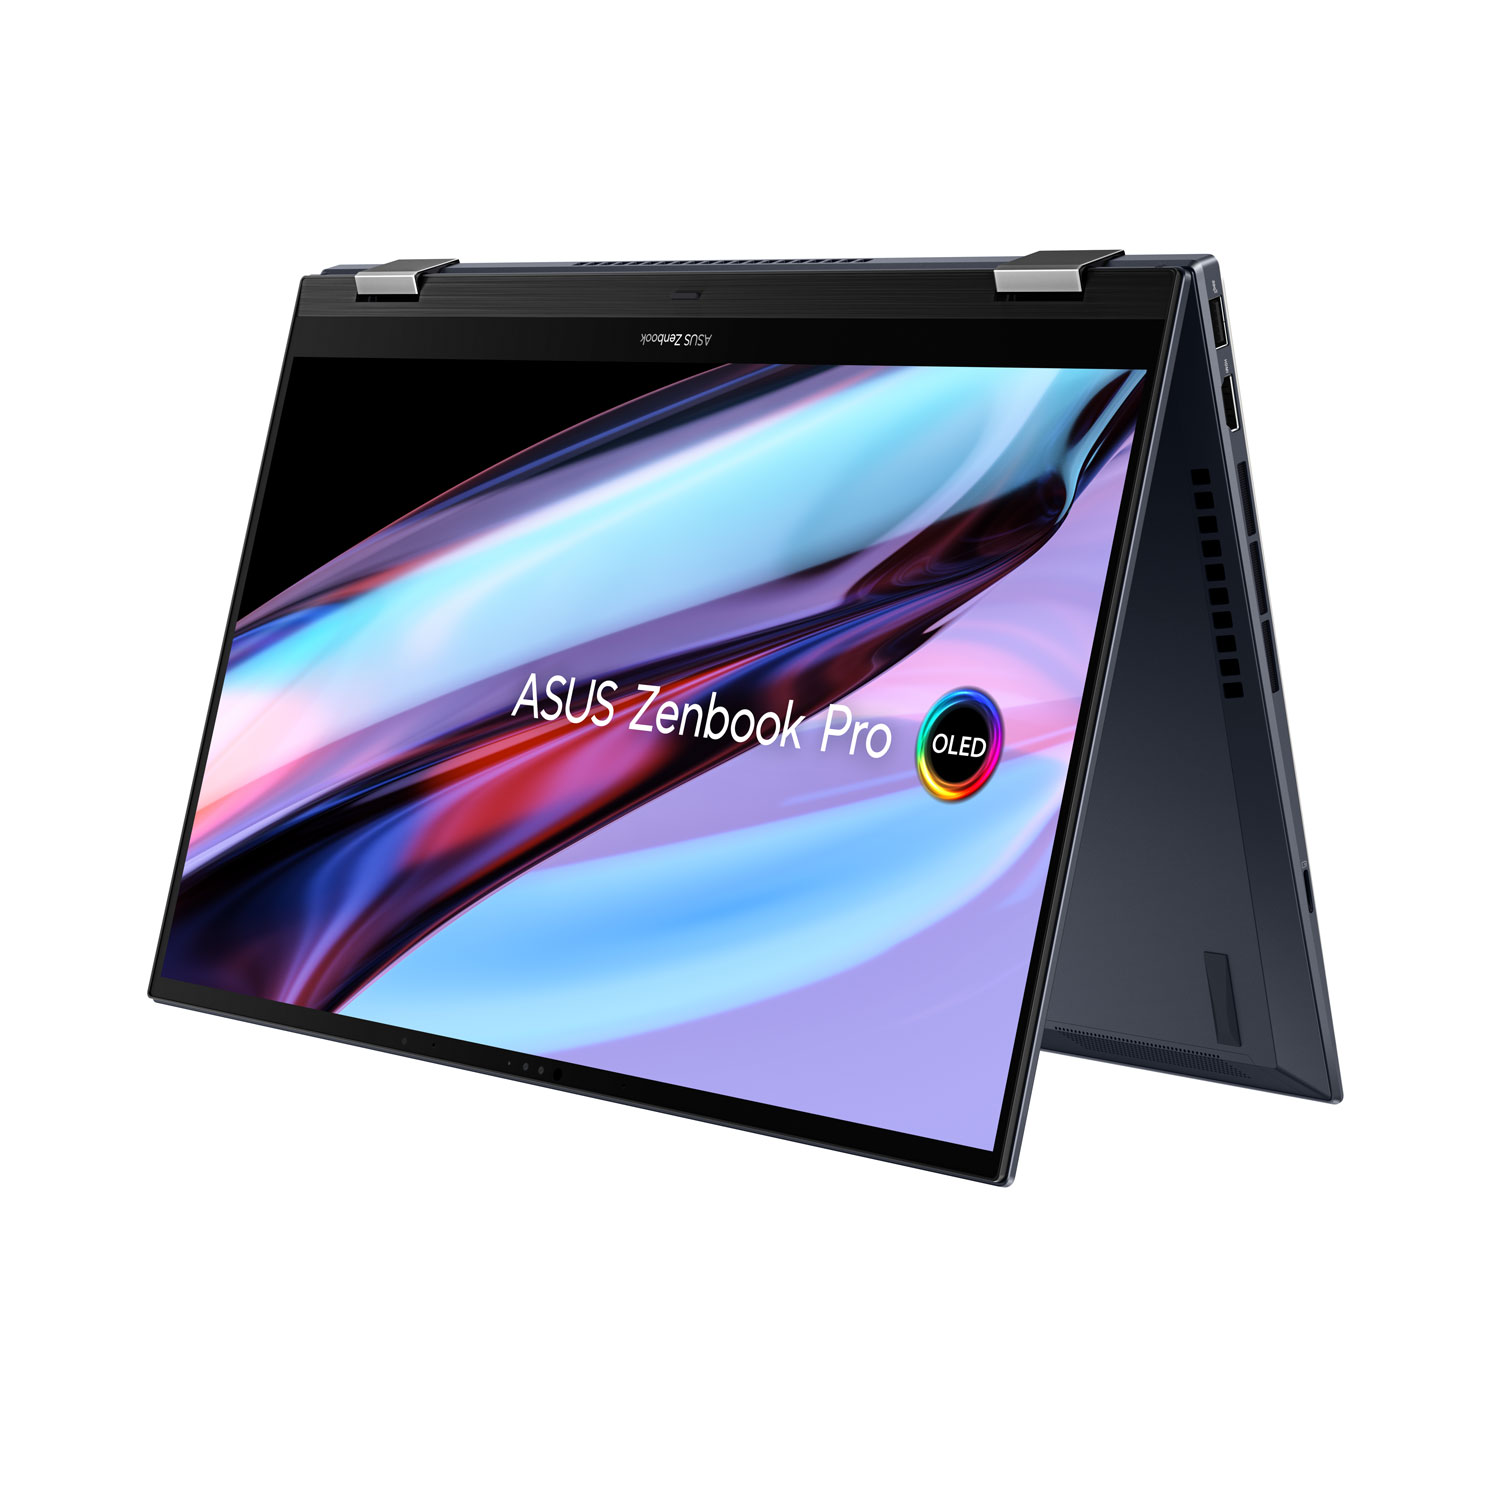 ASUS ZenBook Pro OLED 2.8k 15.6" 2-in-1 Laptop (Intel Core i7-12700H/512GB SSD/16GB RAM/Win 11)